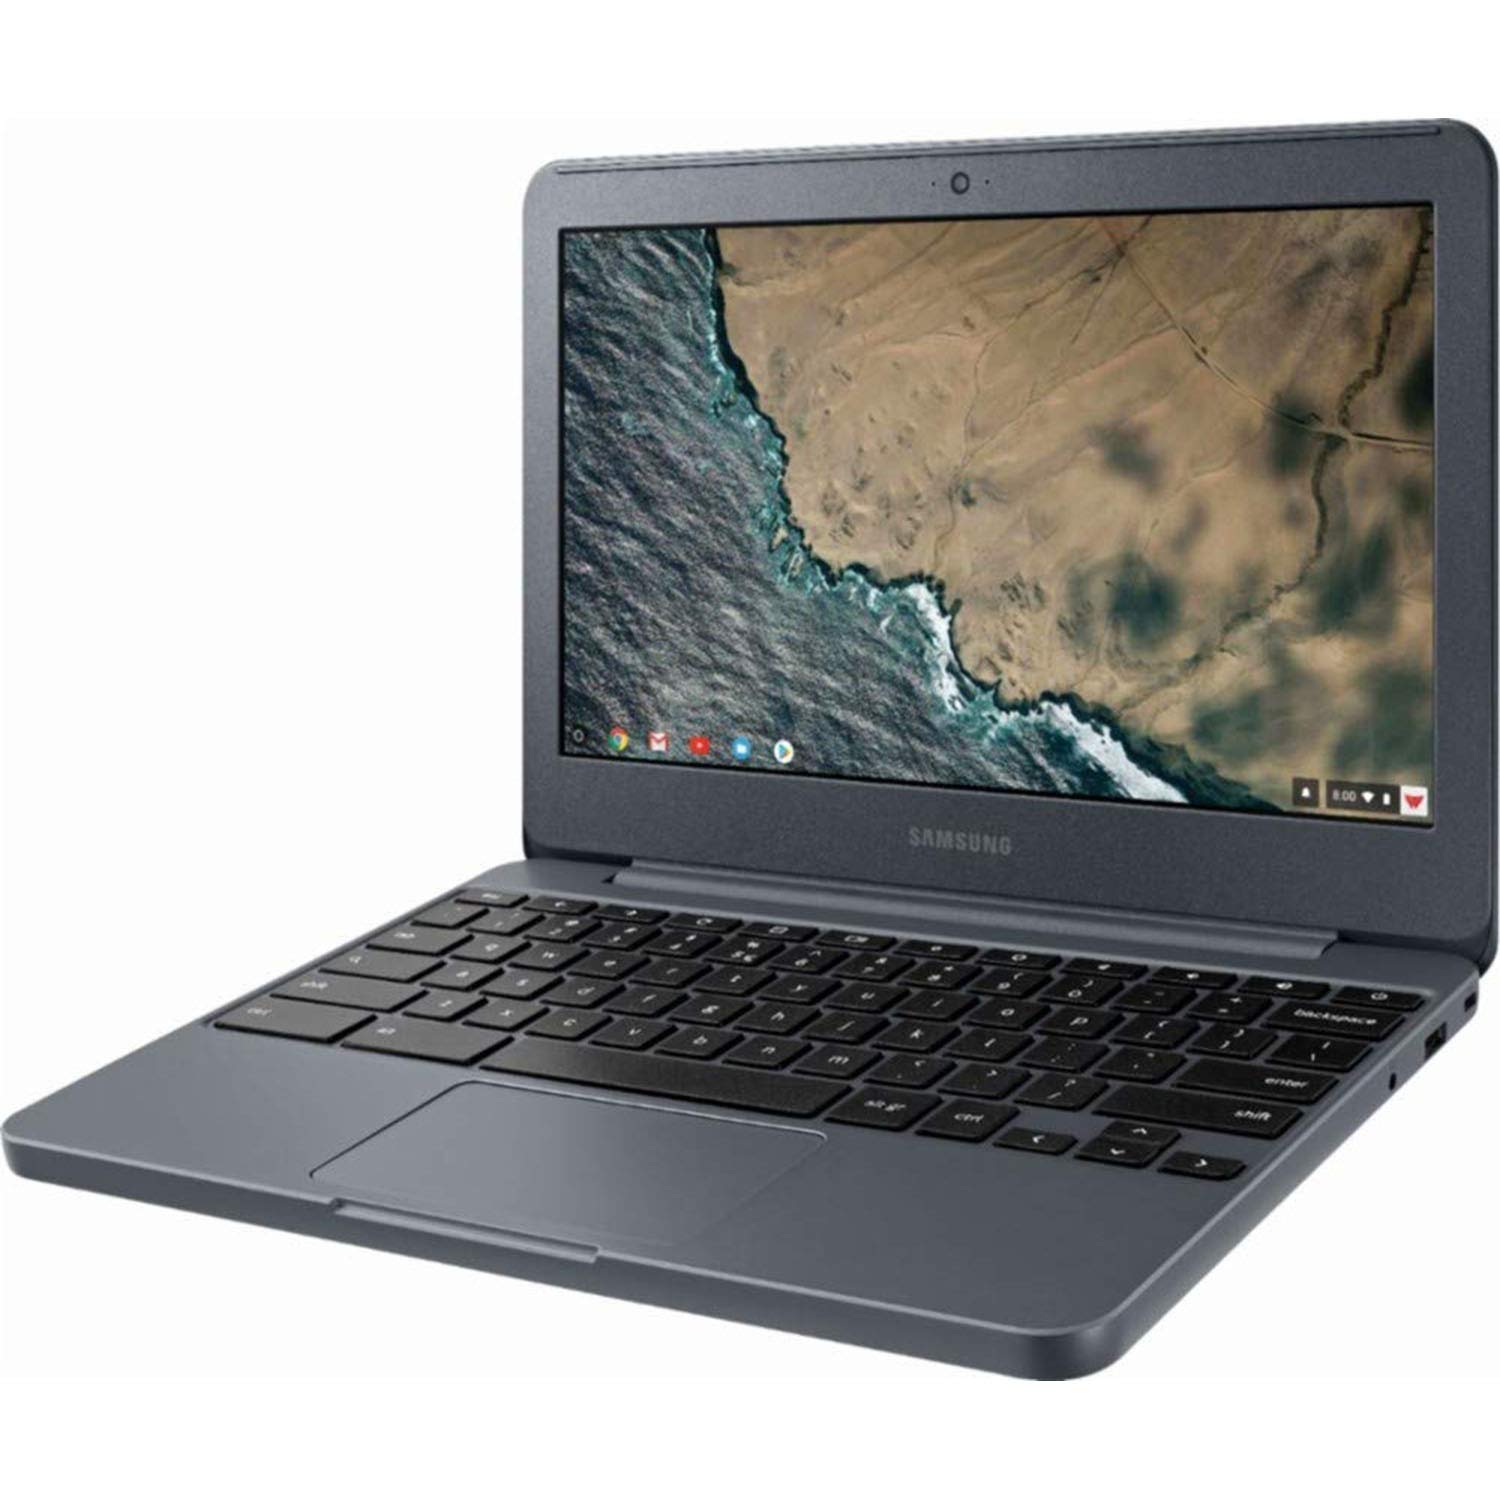 Samsung Chromebook 3 11 inch laptop